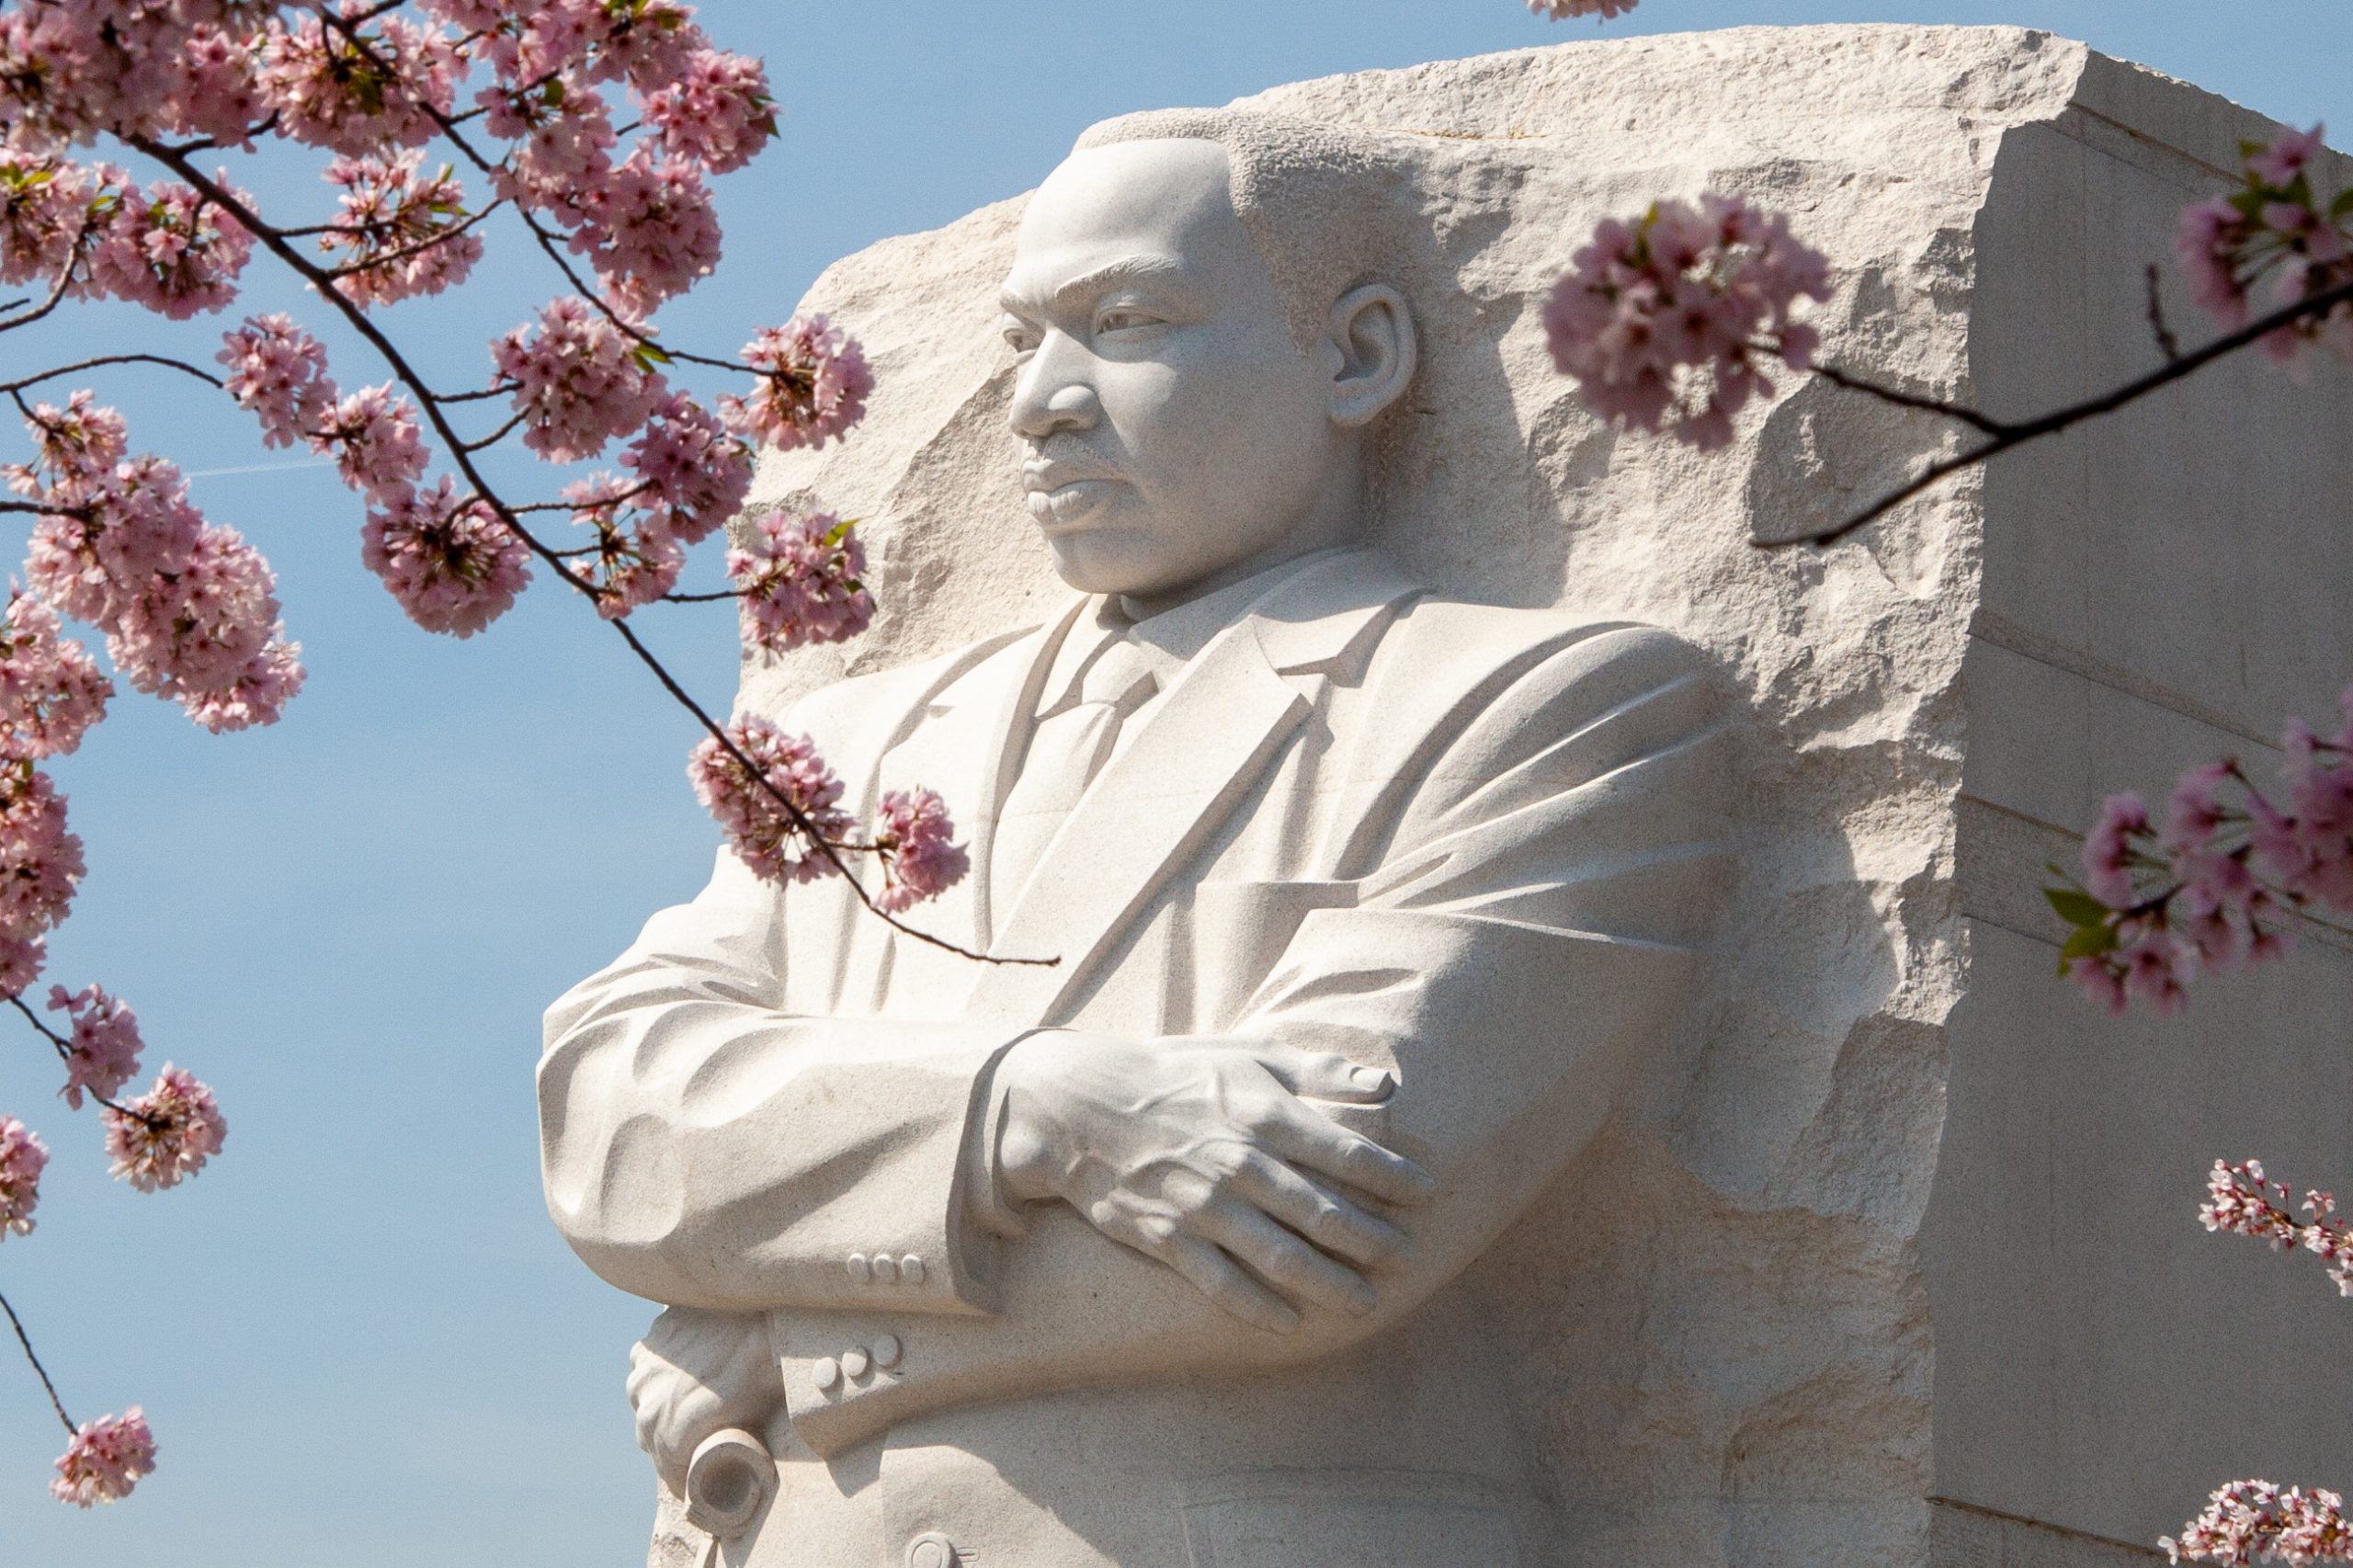 Dr. Martin Luther King, Jr. Memorial